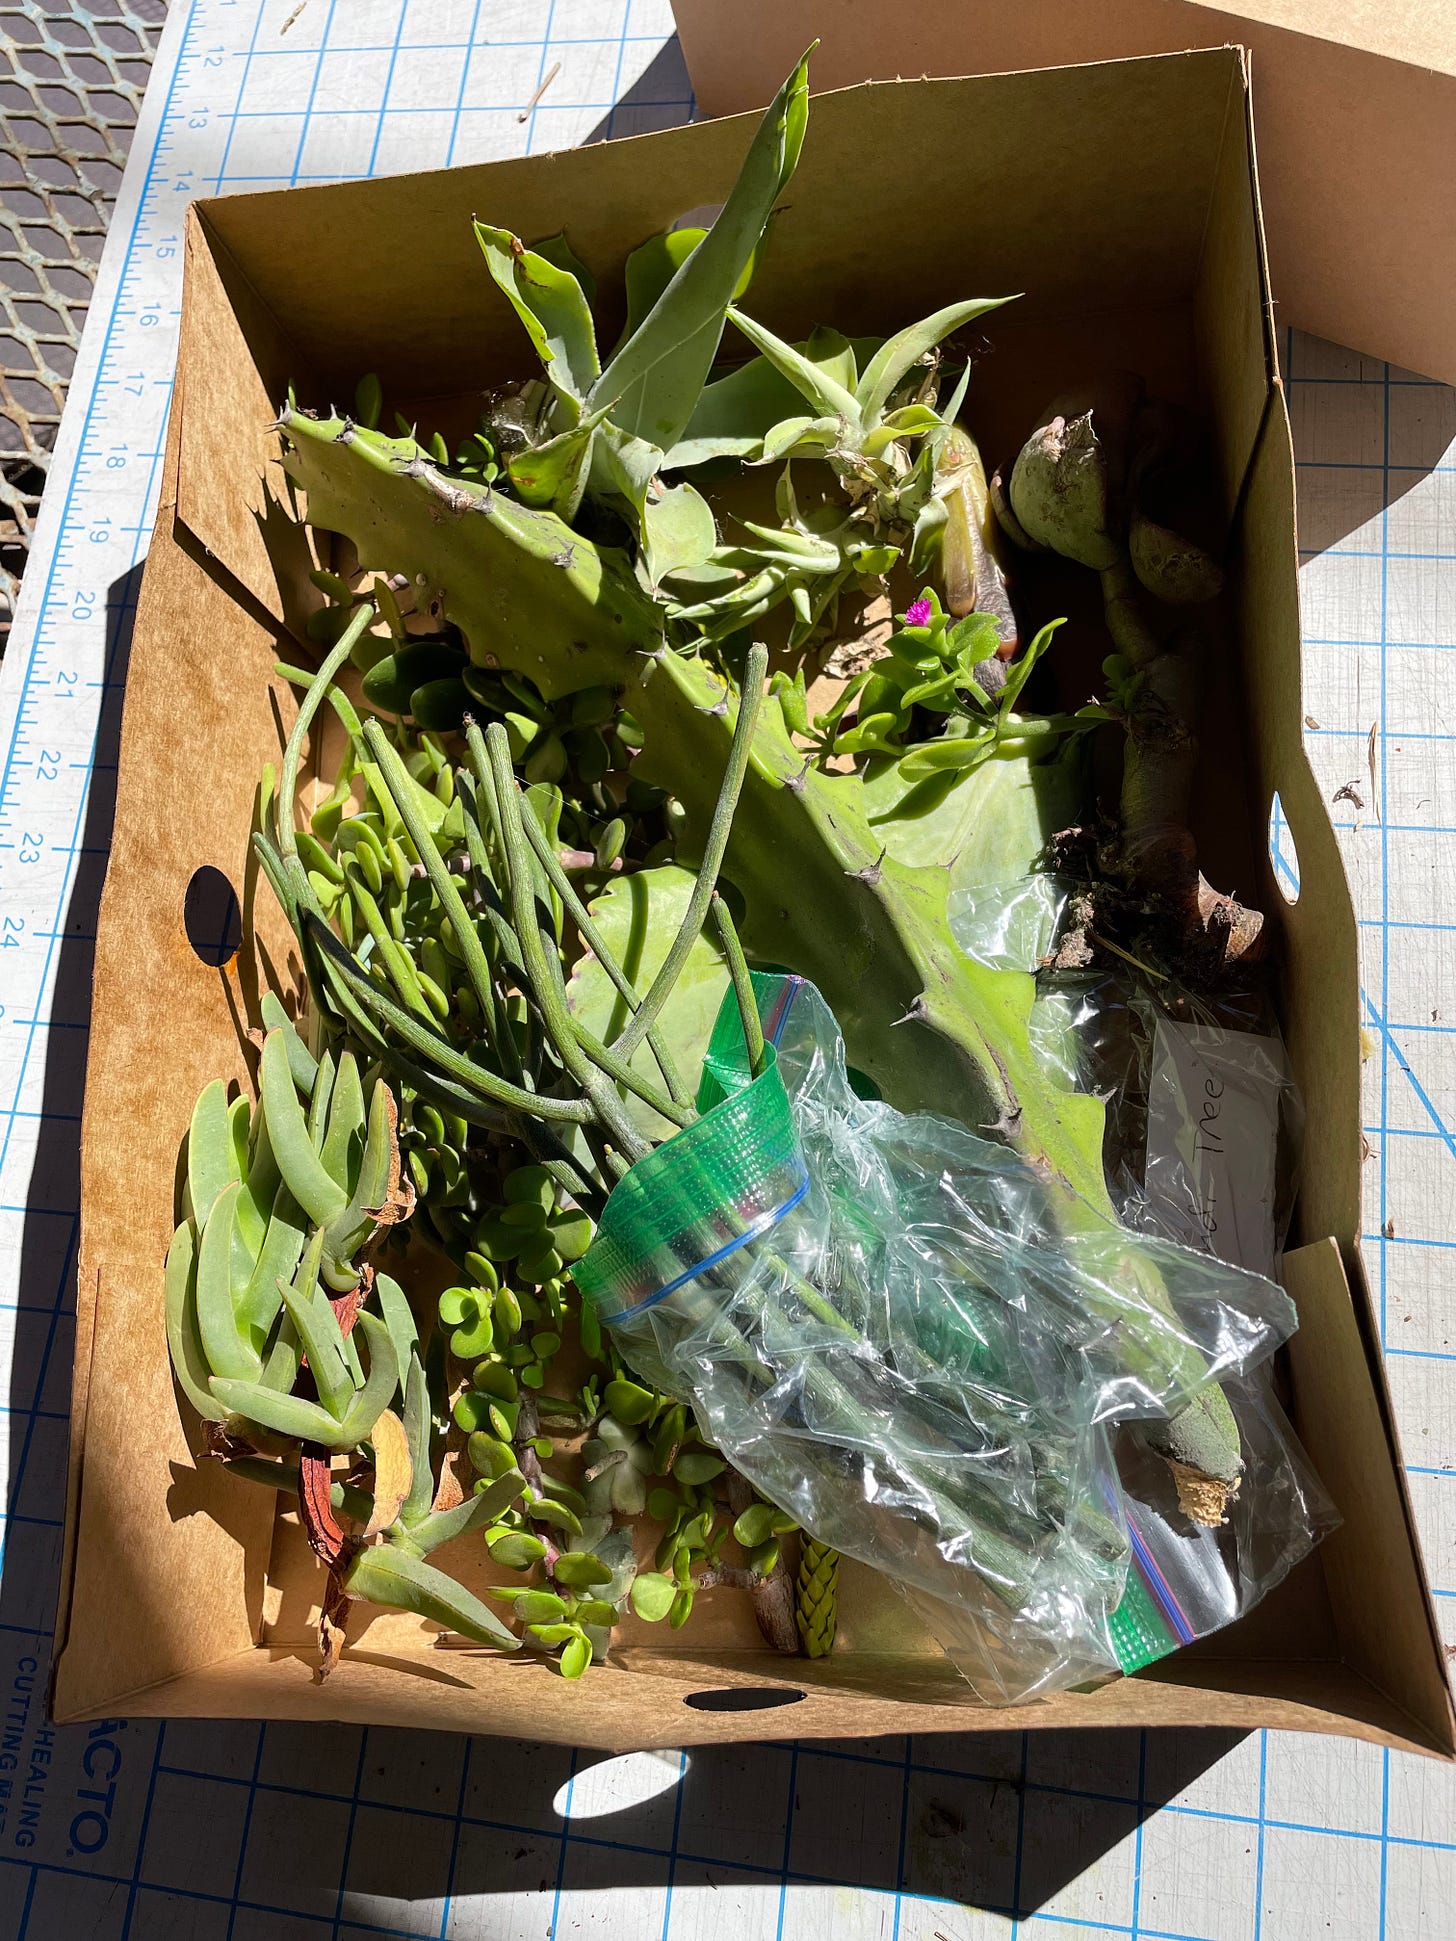 A cardboard box FULL of plant cuttings